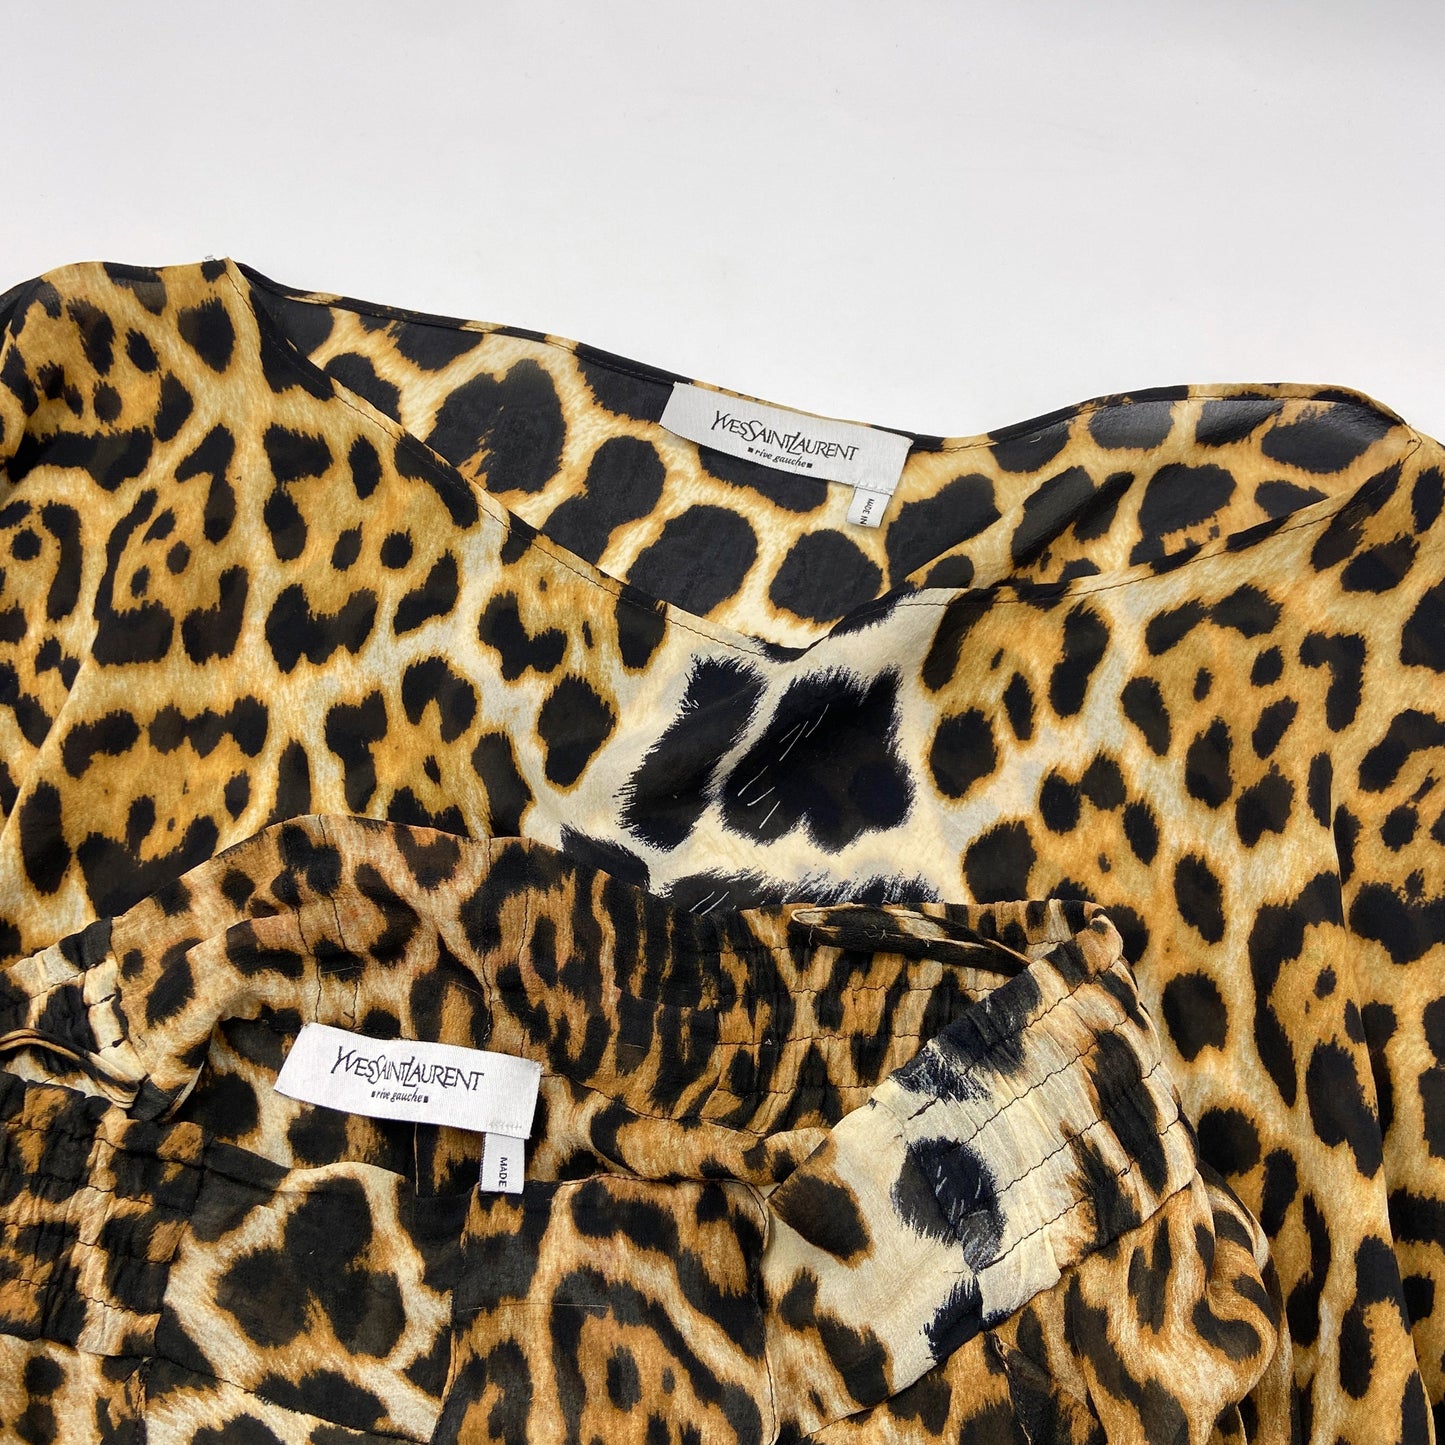 Yves Saint Laurent Rive Gauche Spring 2002 Tom Ford Iconic Runway Leopard/ Cheetah Print Oversized Silk Blouse Top 40